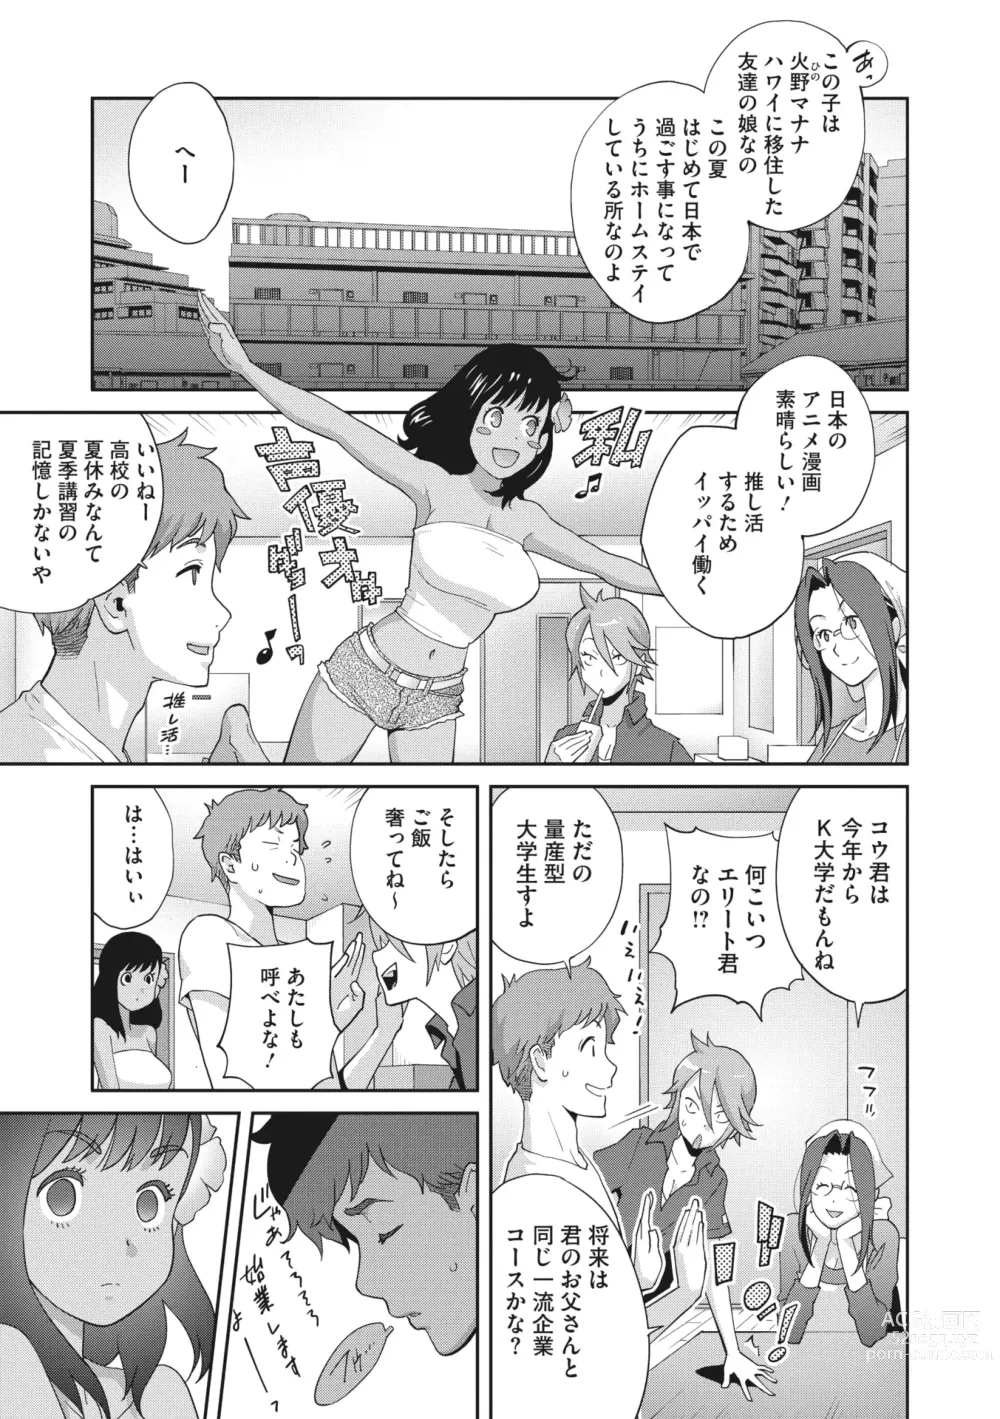 Page 5 of manga Kimama Tawawa Manana 1-4